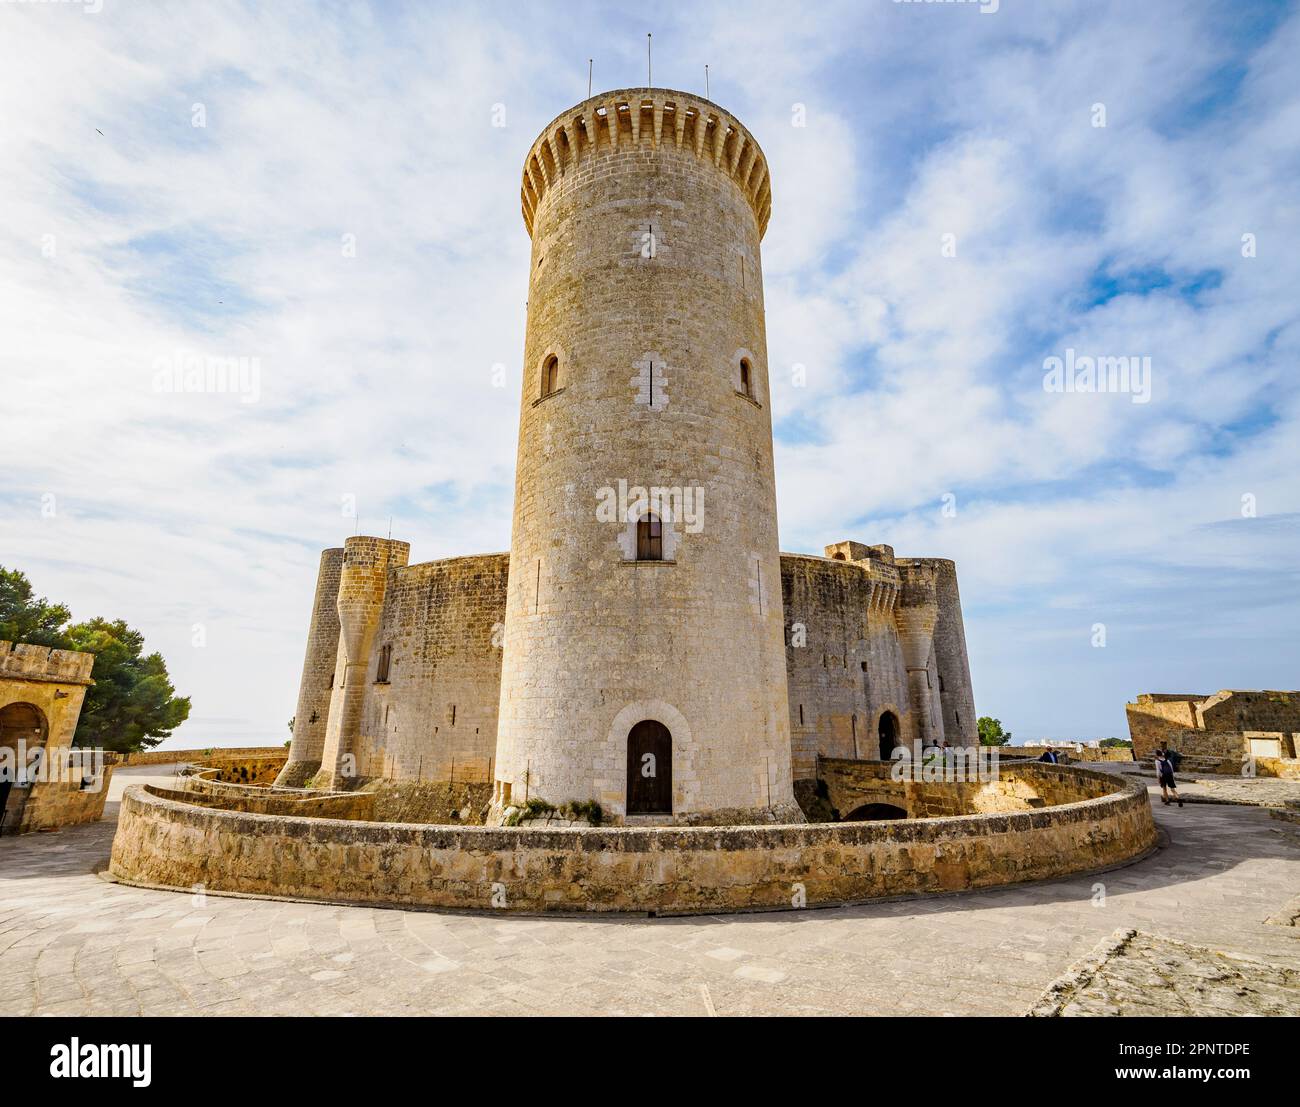 Donjon tower of Bellver Castle the Castillo de Bellver high on a hill overlooking Palma de Majorca in the Balearic Islands of Spain Stock Photo